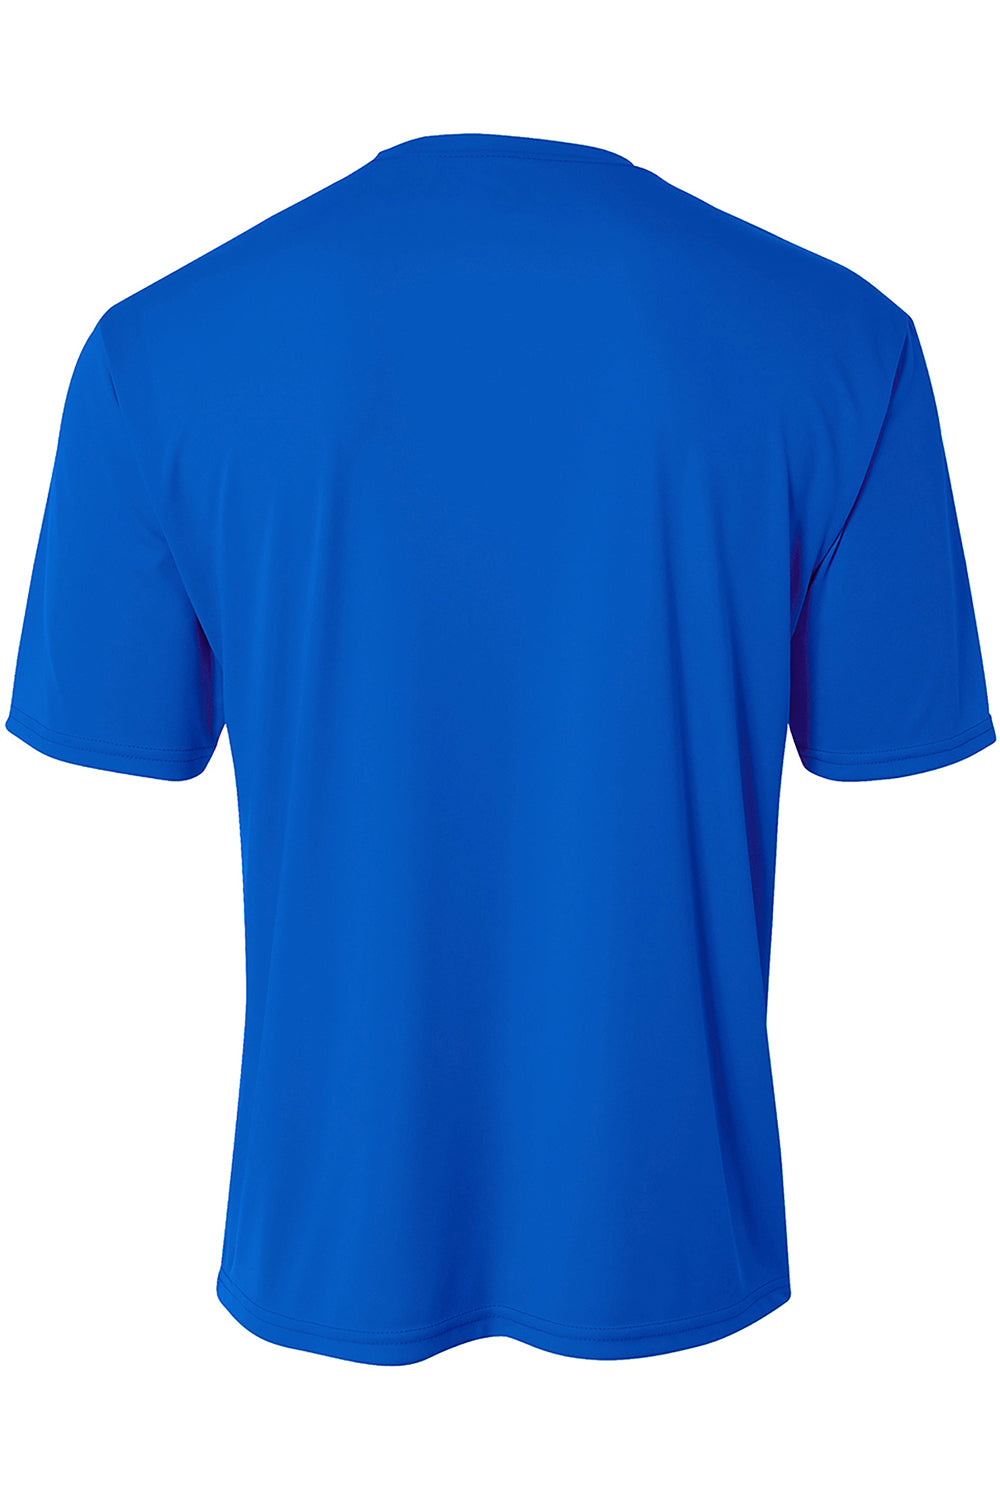 A4 N3402 Mens Sprint Performance Moisture Wicking Short Sleeve Crewneck T-Shirt Royal Blue Flat Back